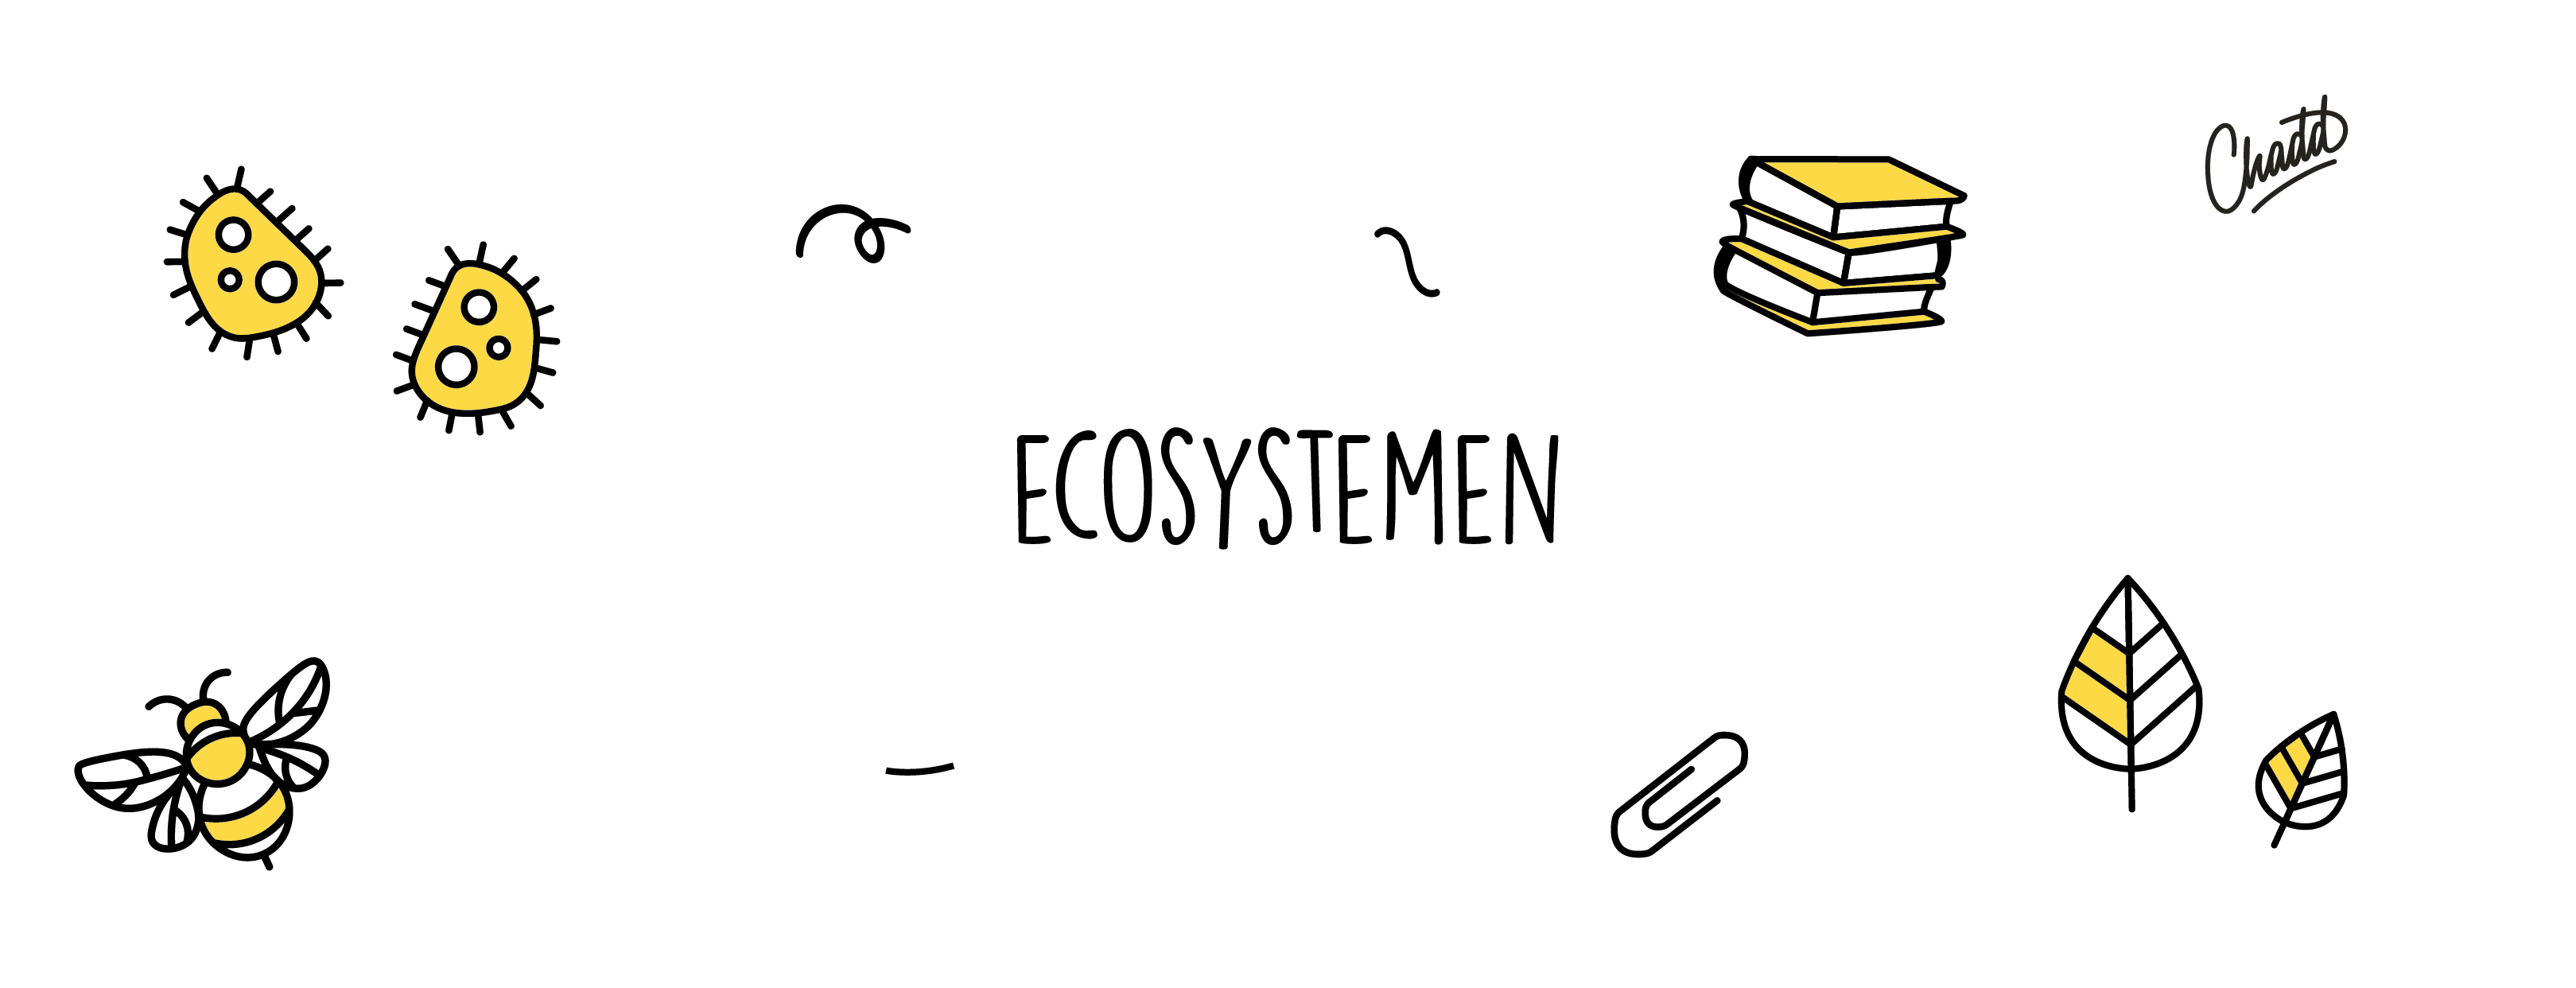 ecosystemen